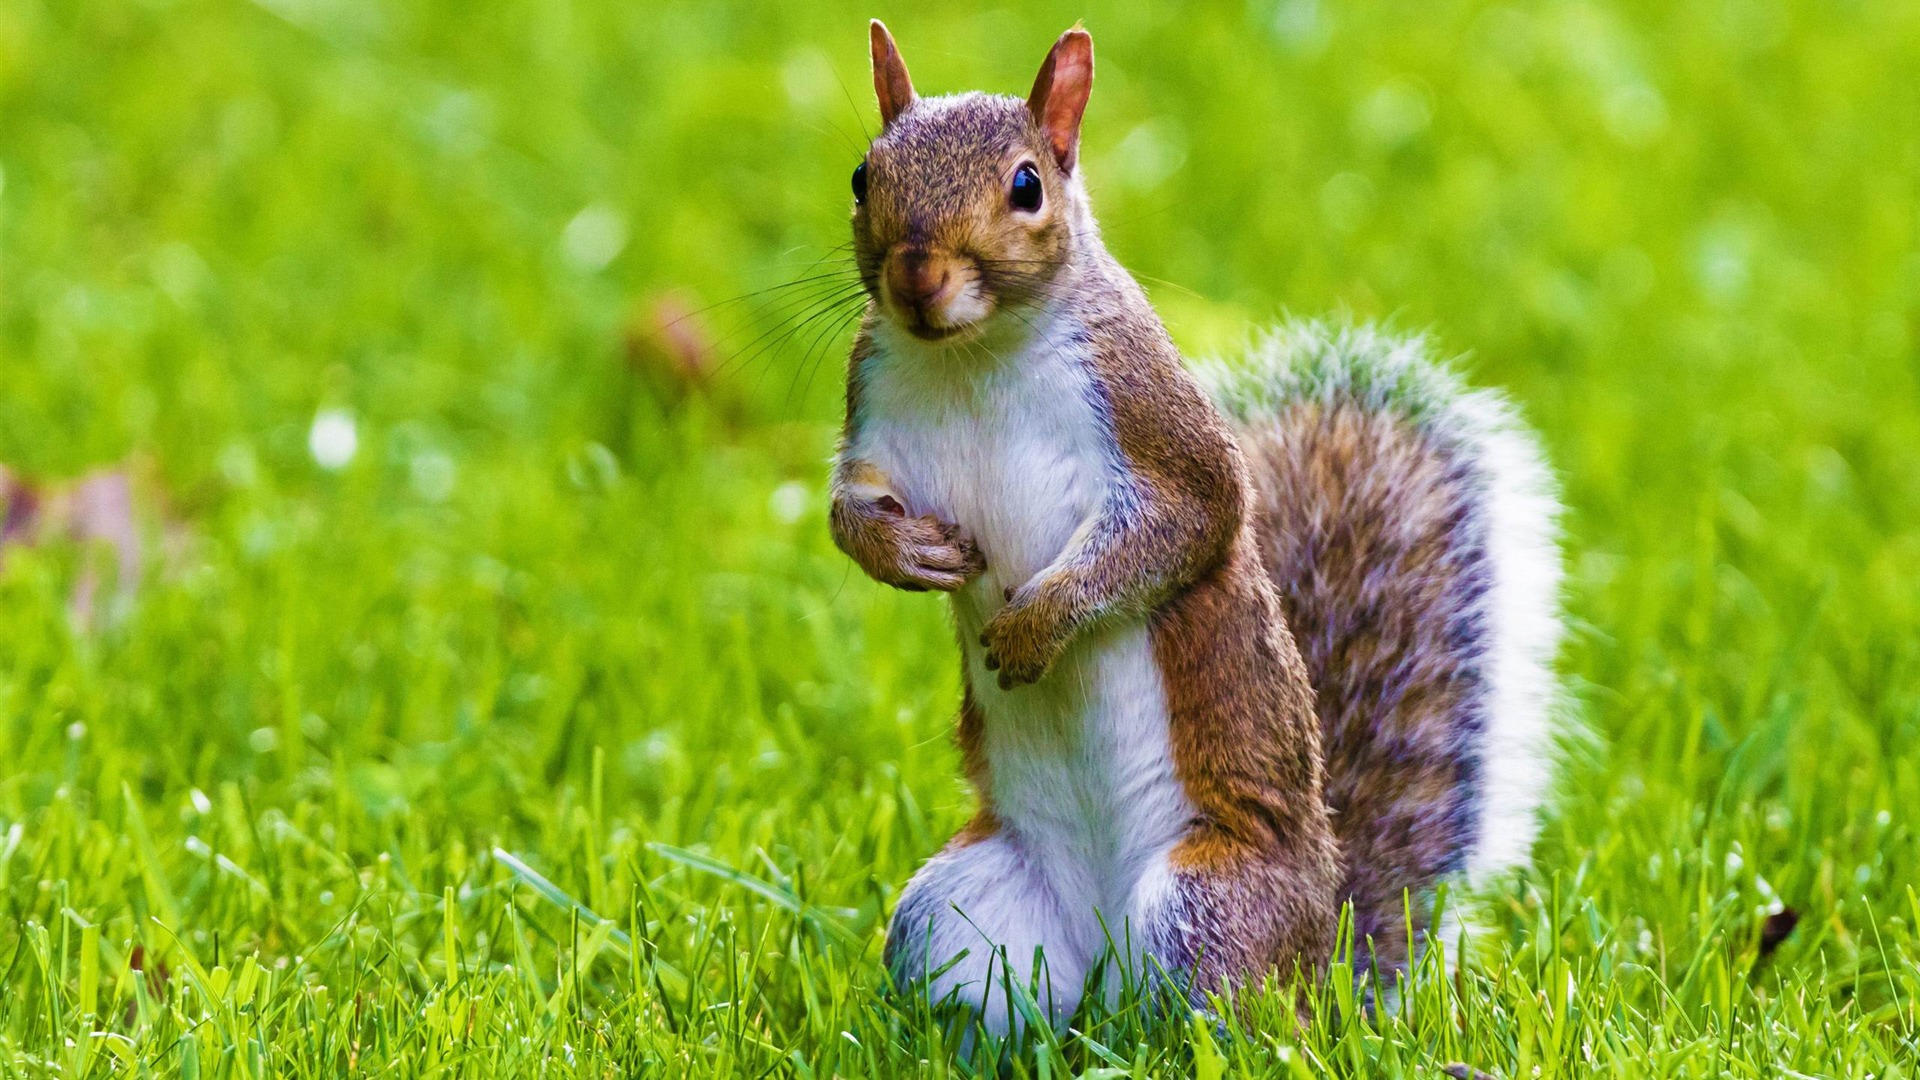 Cute Squirrel Wild Animal Desktop Wallpaper